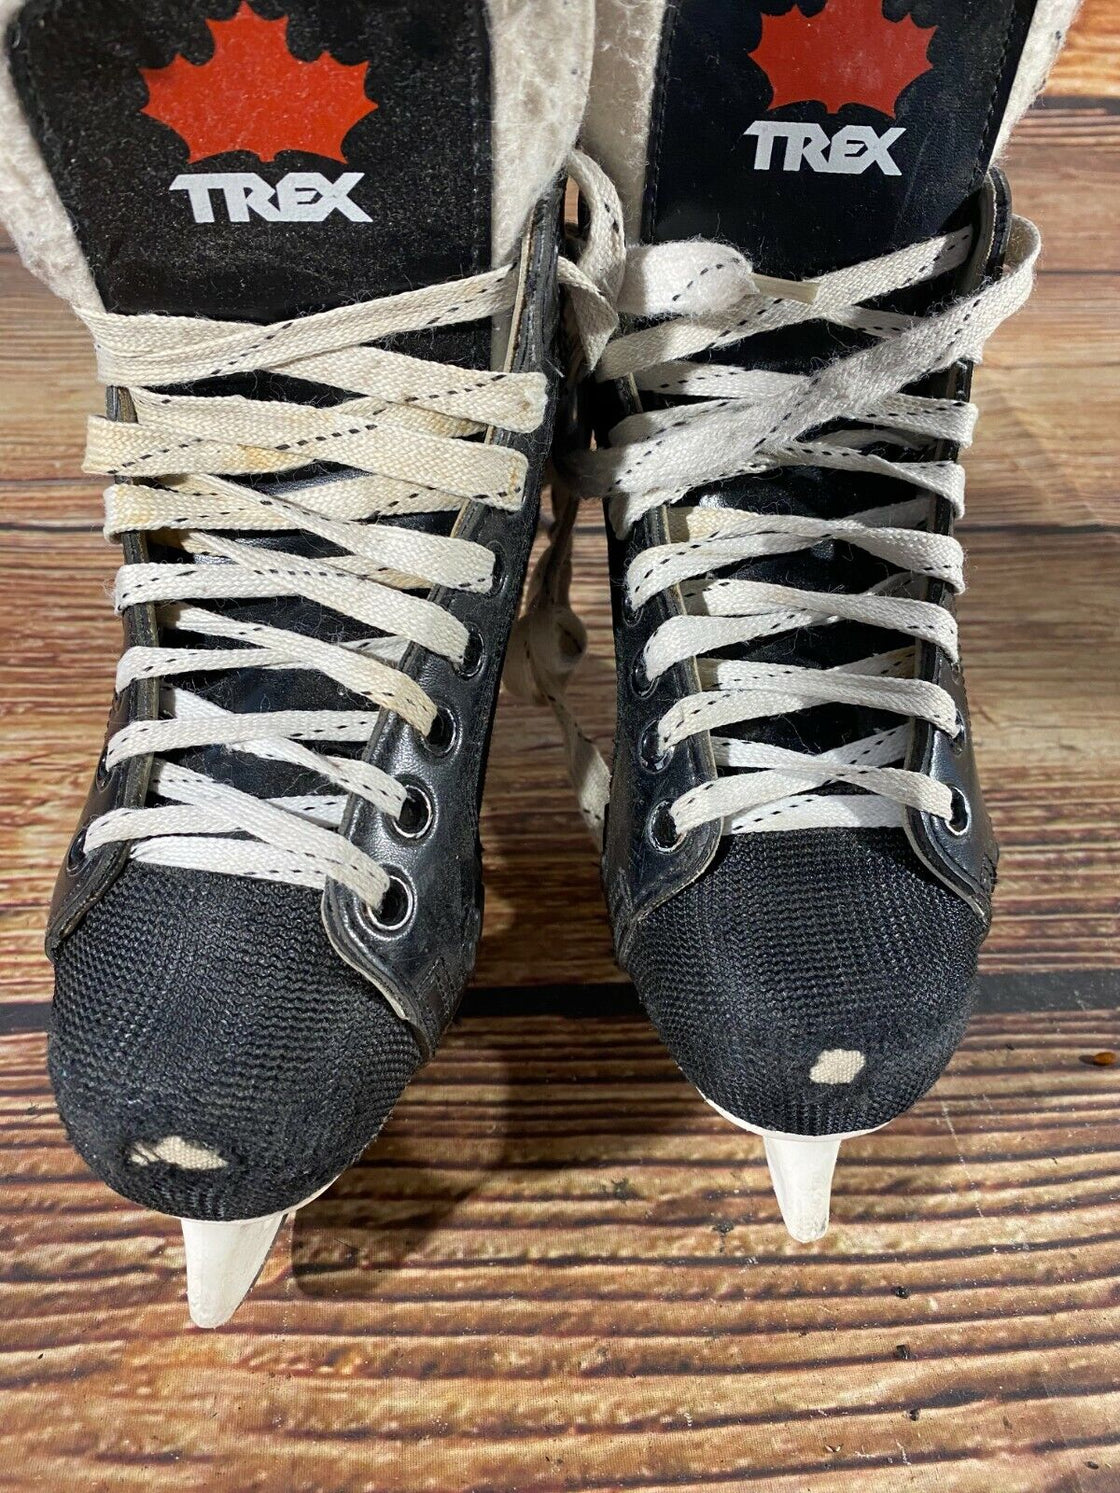 TREX Ice Skates for Ice Hockey Winter Ice Skating Kids / Youth Size Mondo 210